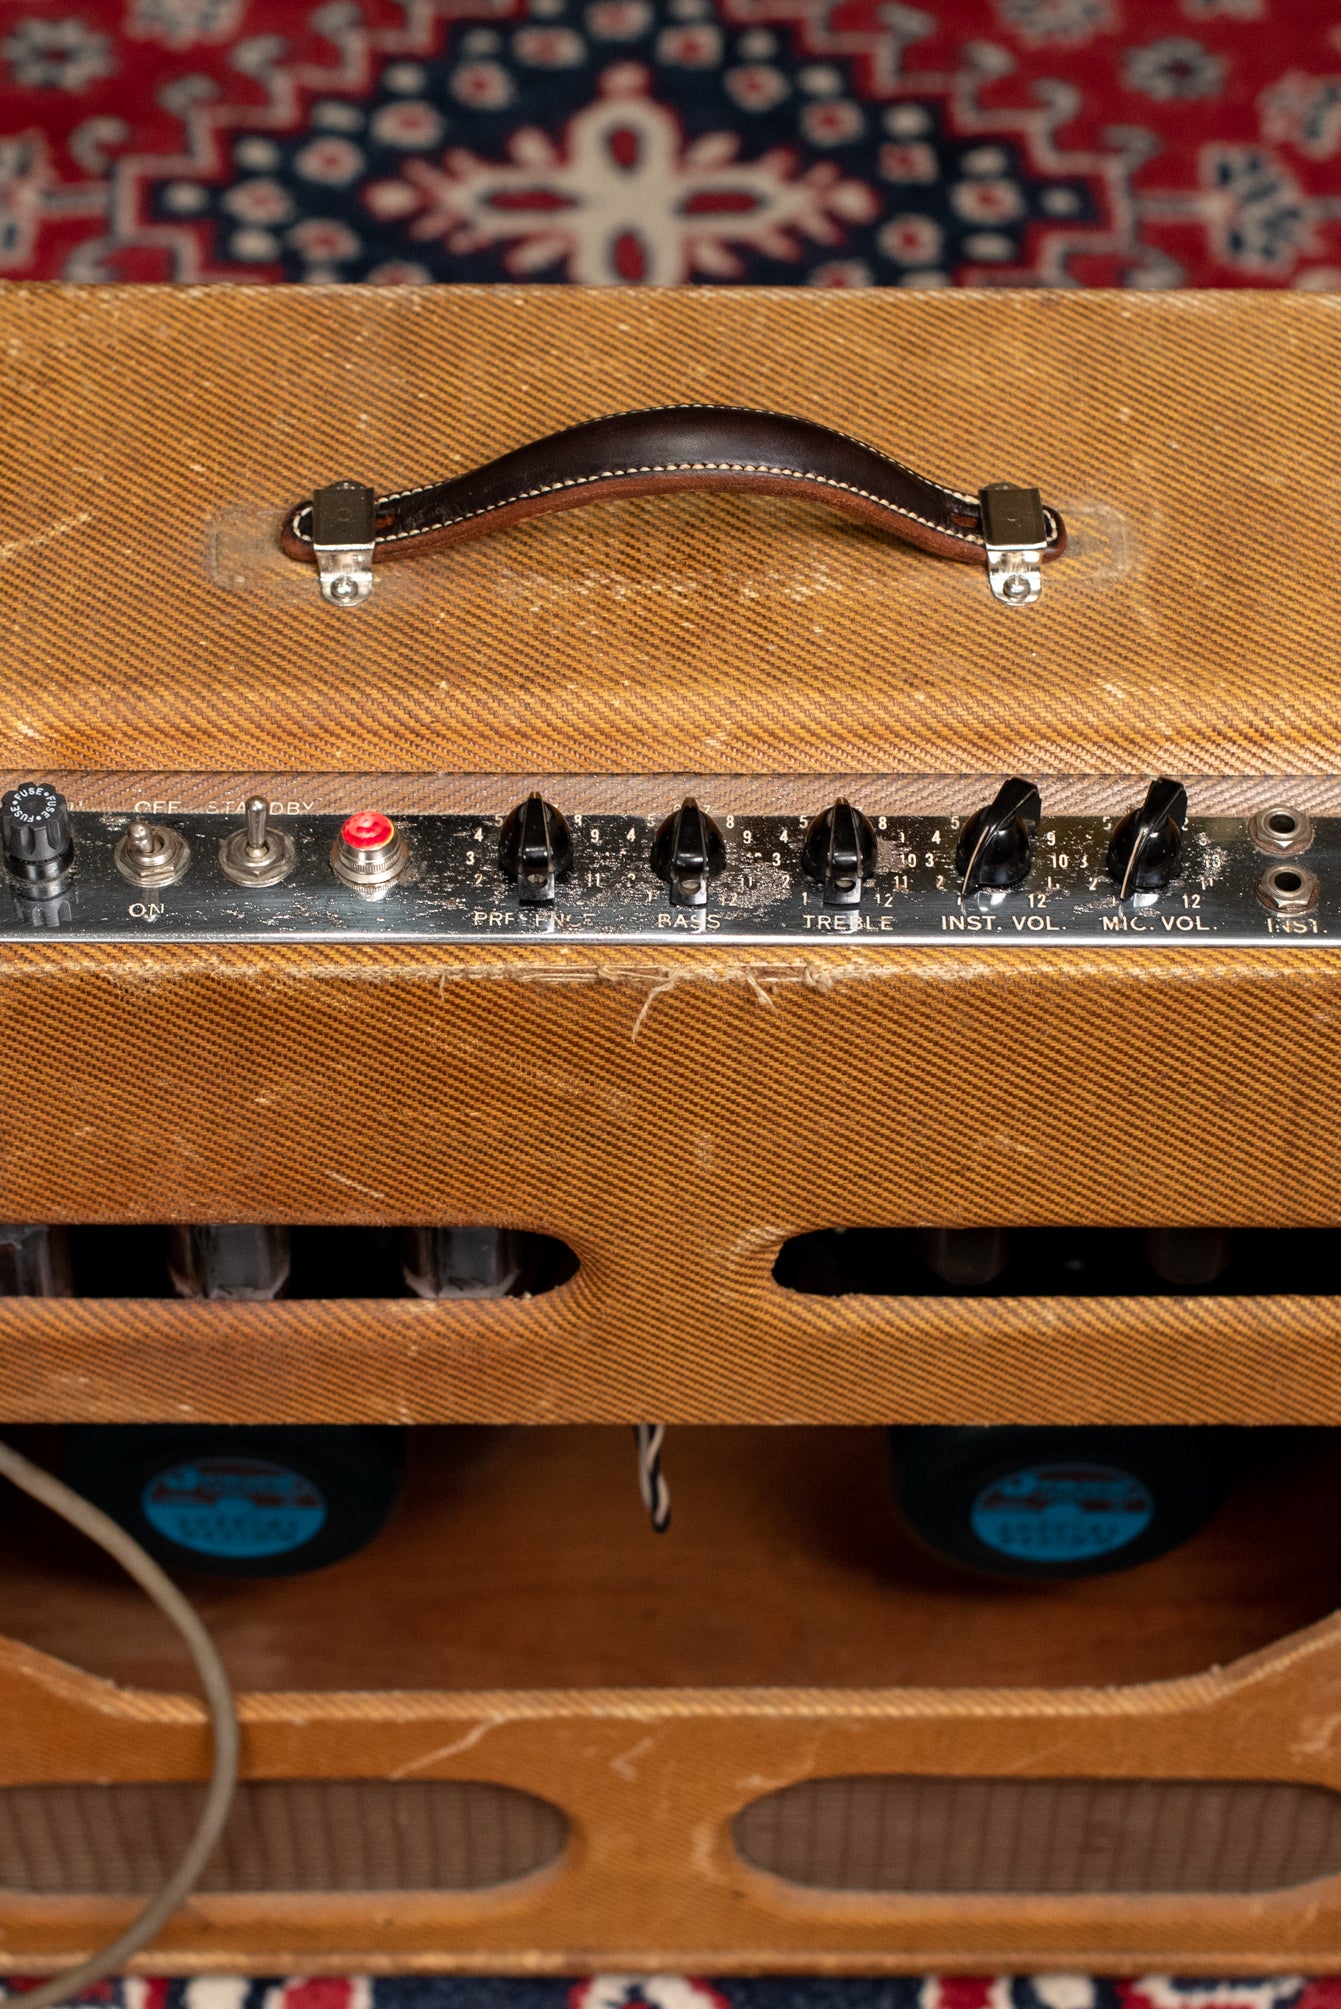 Bandmaster tweed control panel